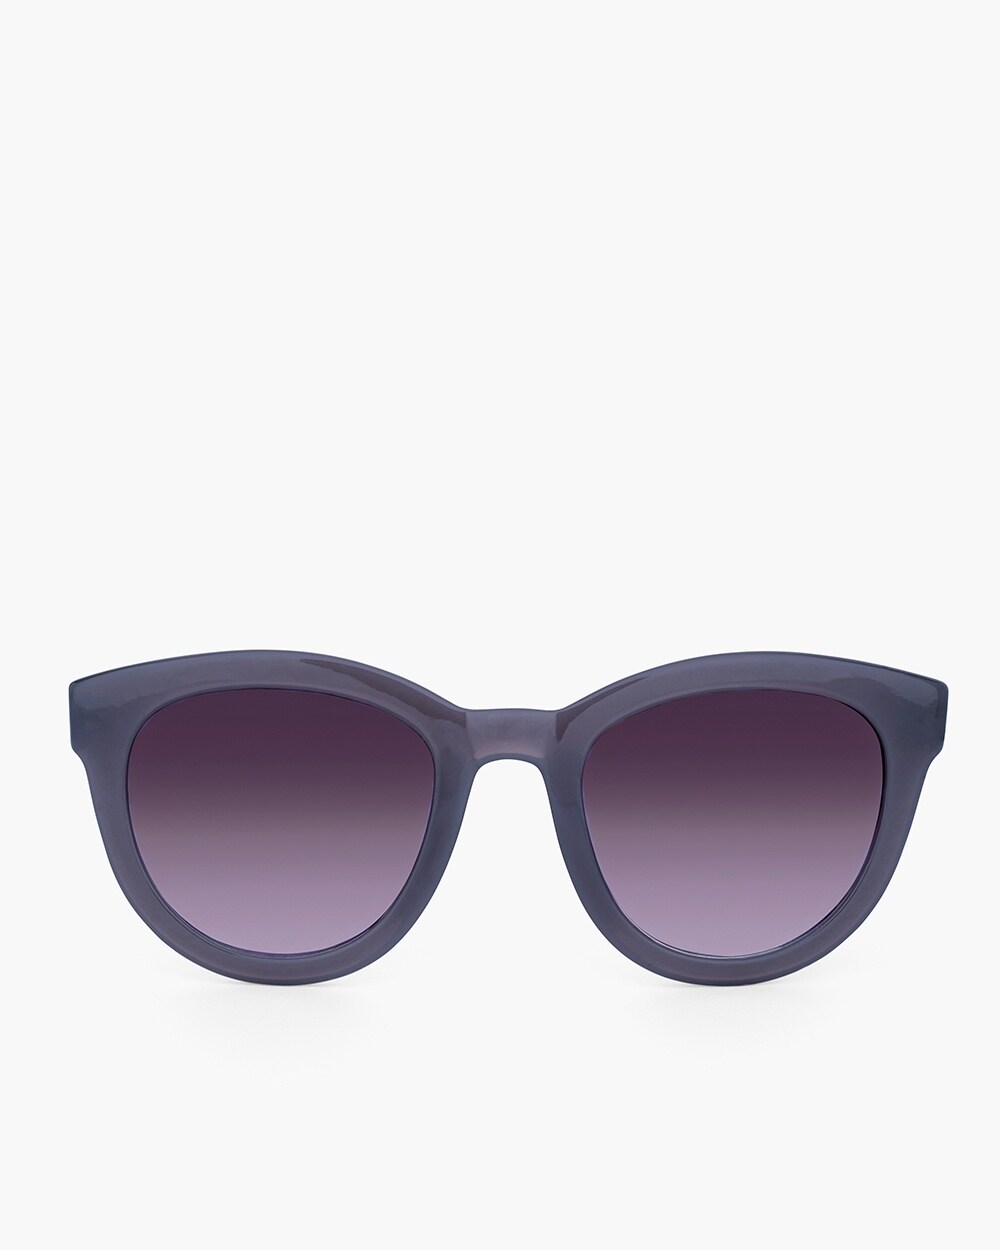 Bristol Sunglasses